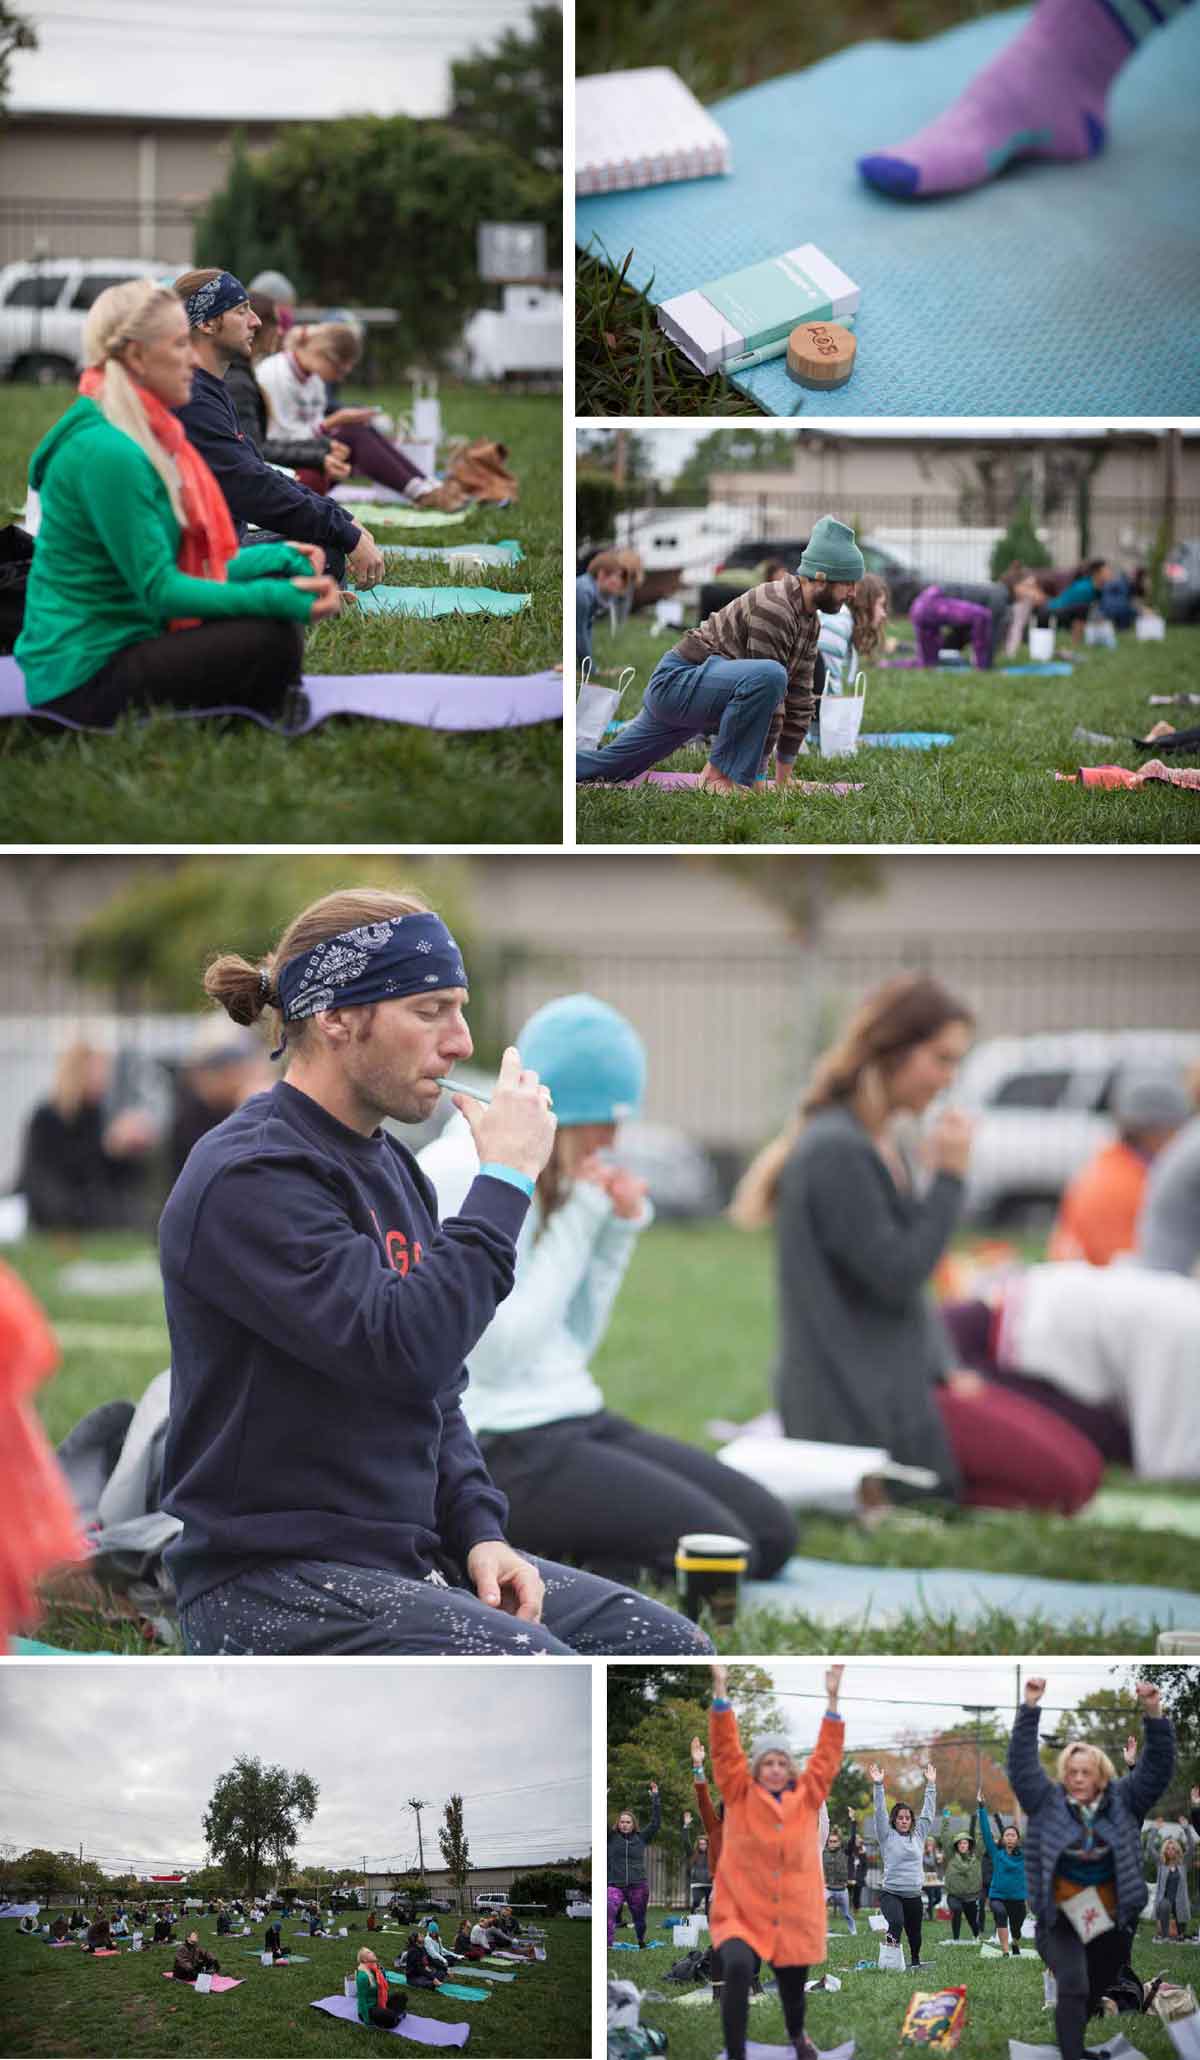 CBD enhanced yoga event by Hempsley in Columbia, Missouri